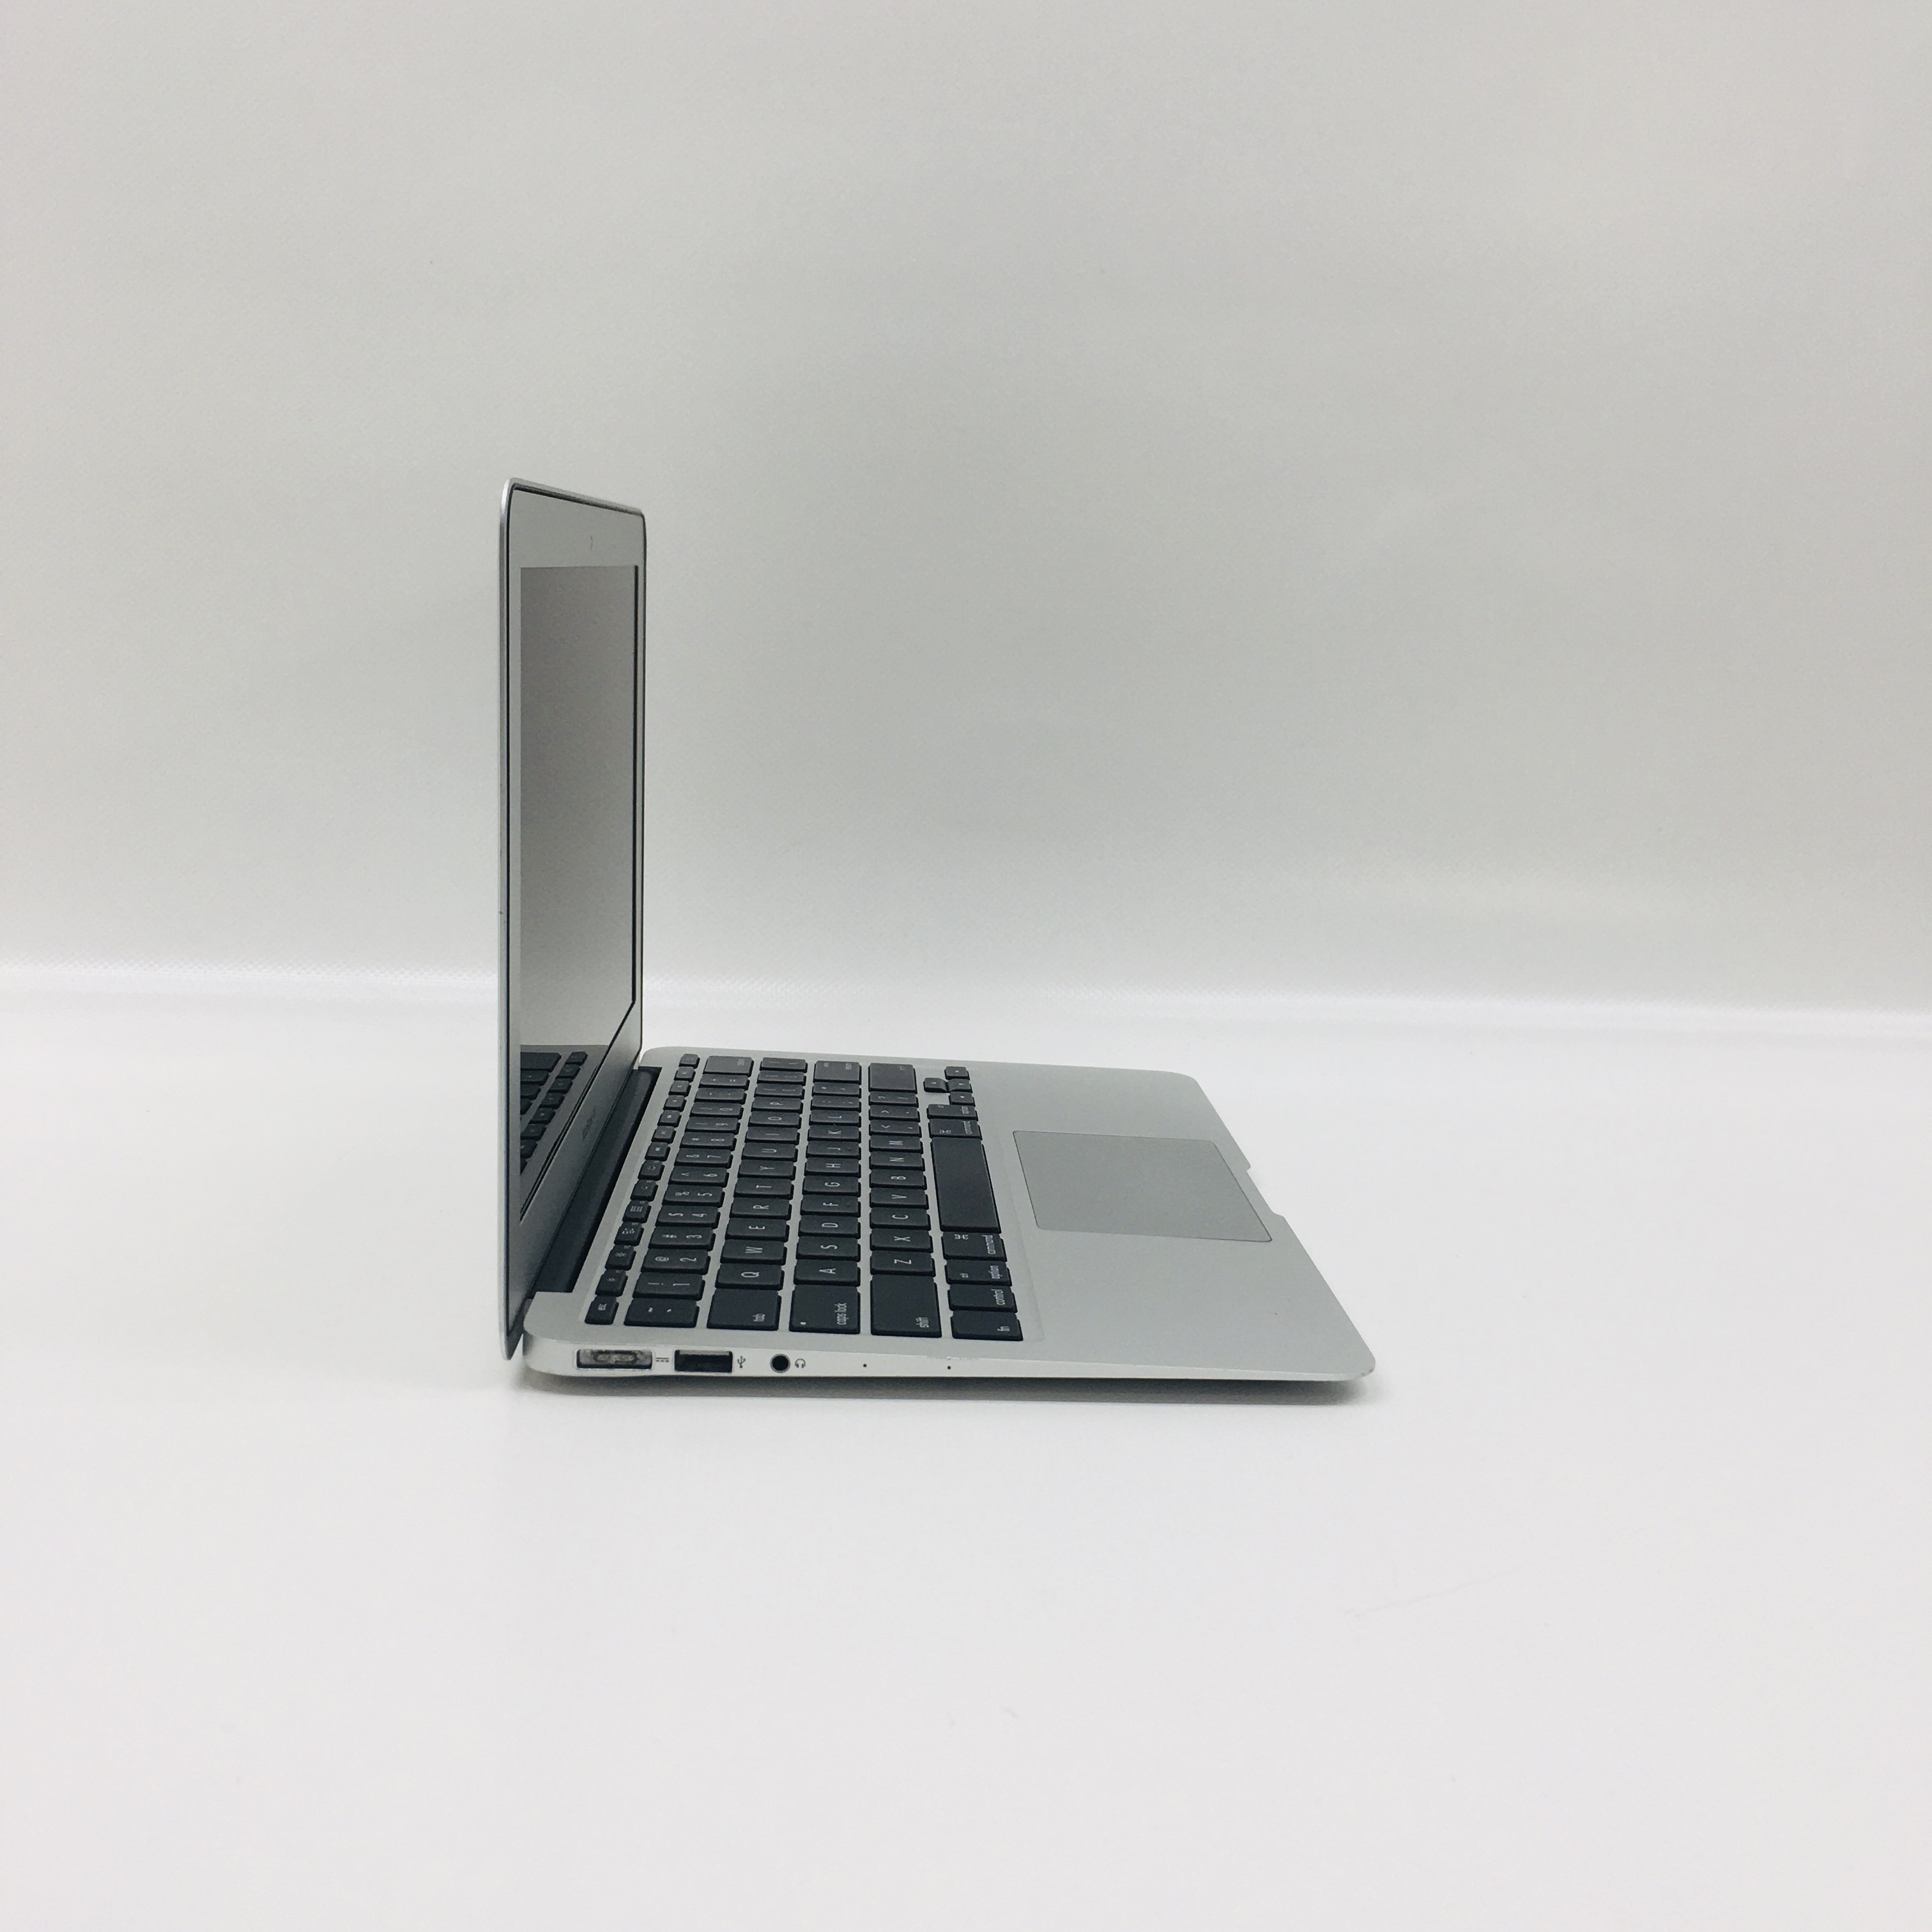 MacBook Air 11" Early 2015 (Intel Core i5 1.6 GHz 4 GB RAM 128 GB SSD), Intel Core i5 1.6 GHz, 4 GB RAM, 128 GB SSD, image 2